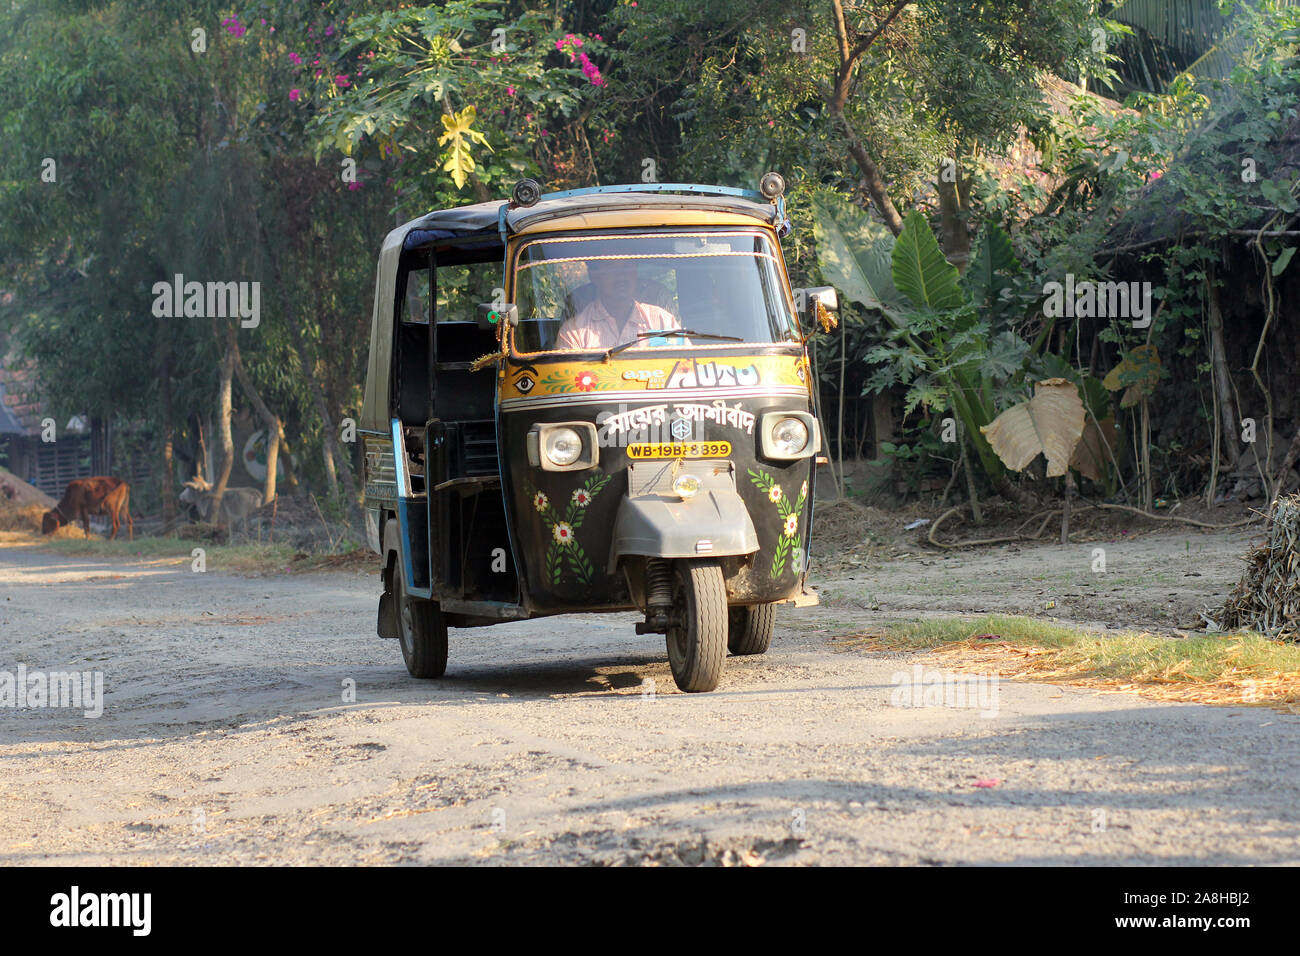 Auto rickshaw taxis on a road in Baidyapur, India Stock Photo